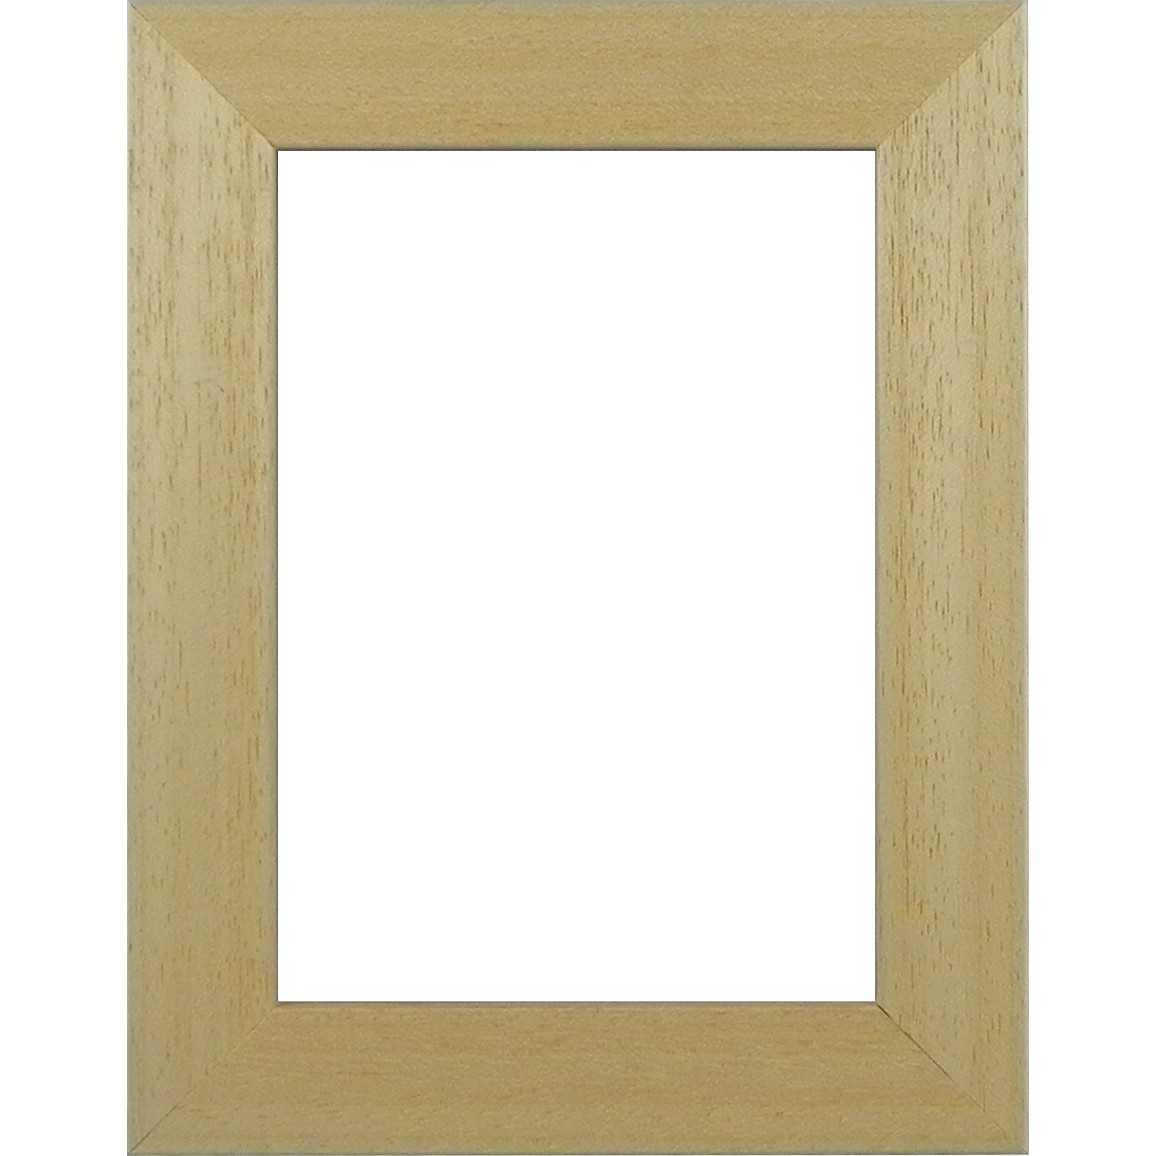 Picture Frame - Square Box medium Natural Timber - EFrame Ireland